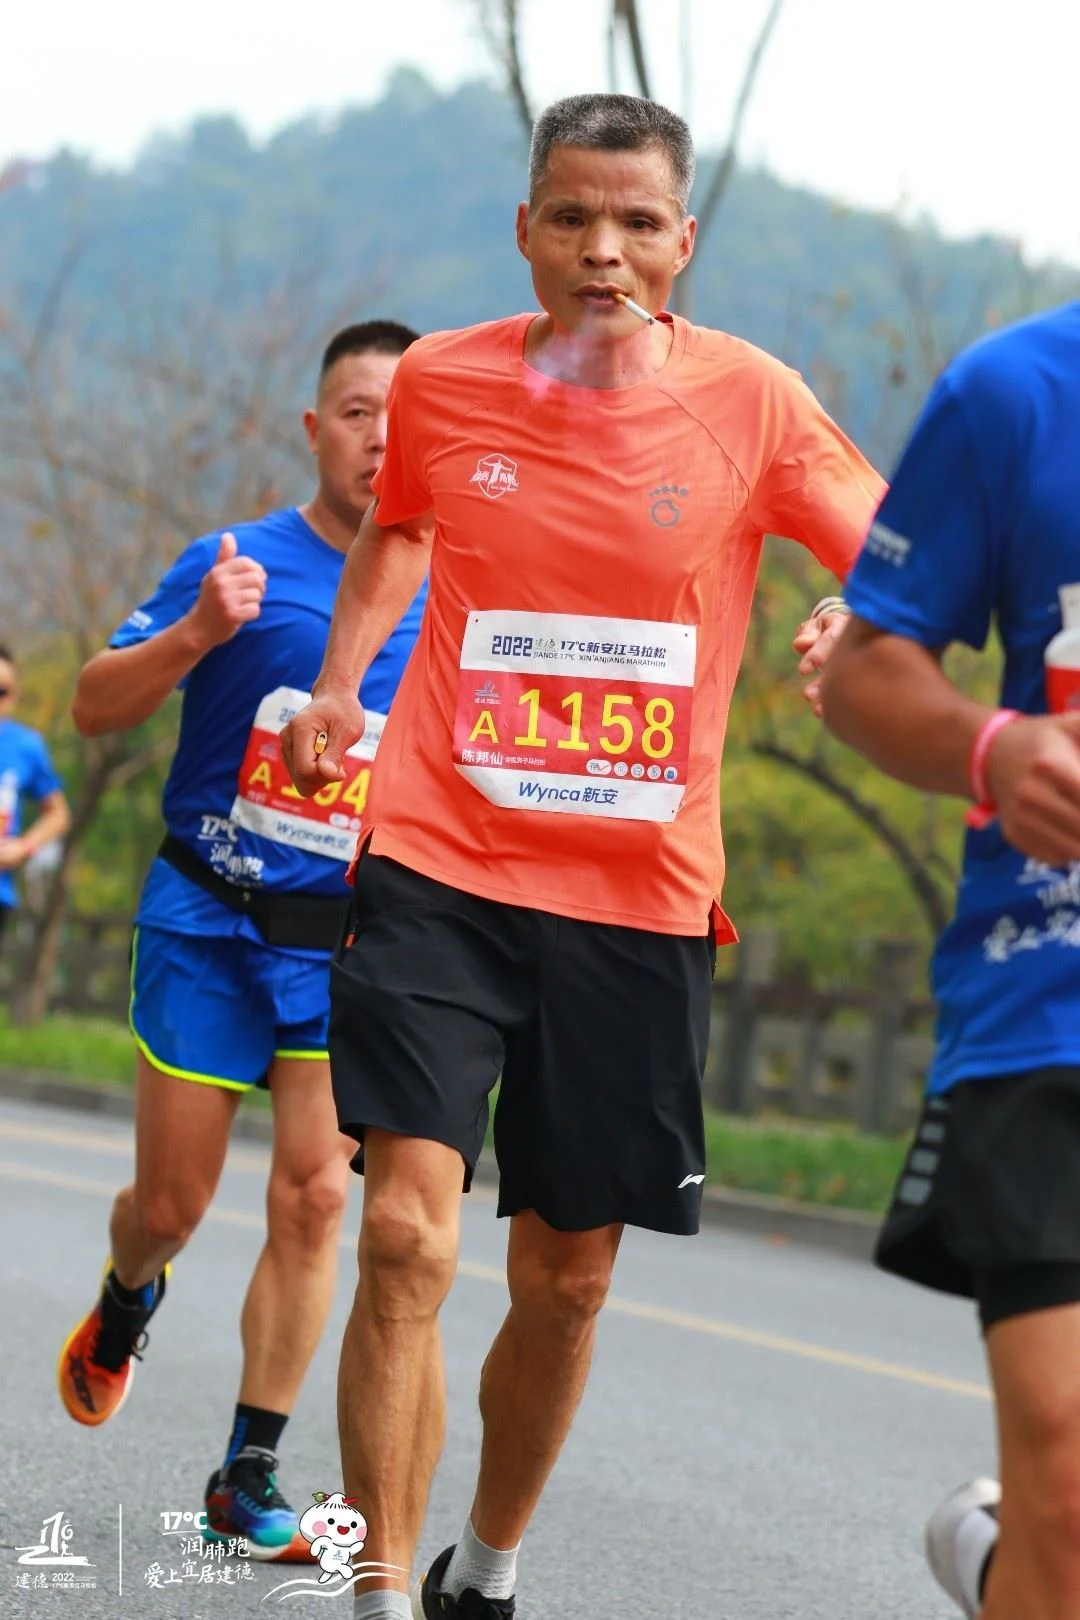 Chen smoking while running 42km marathon